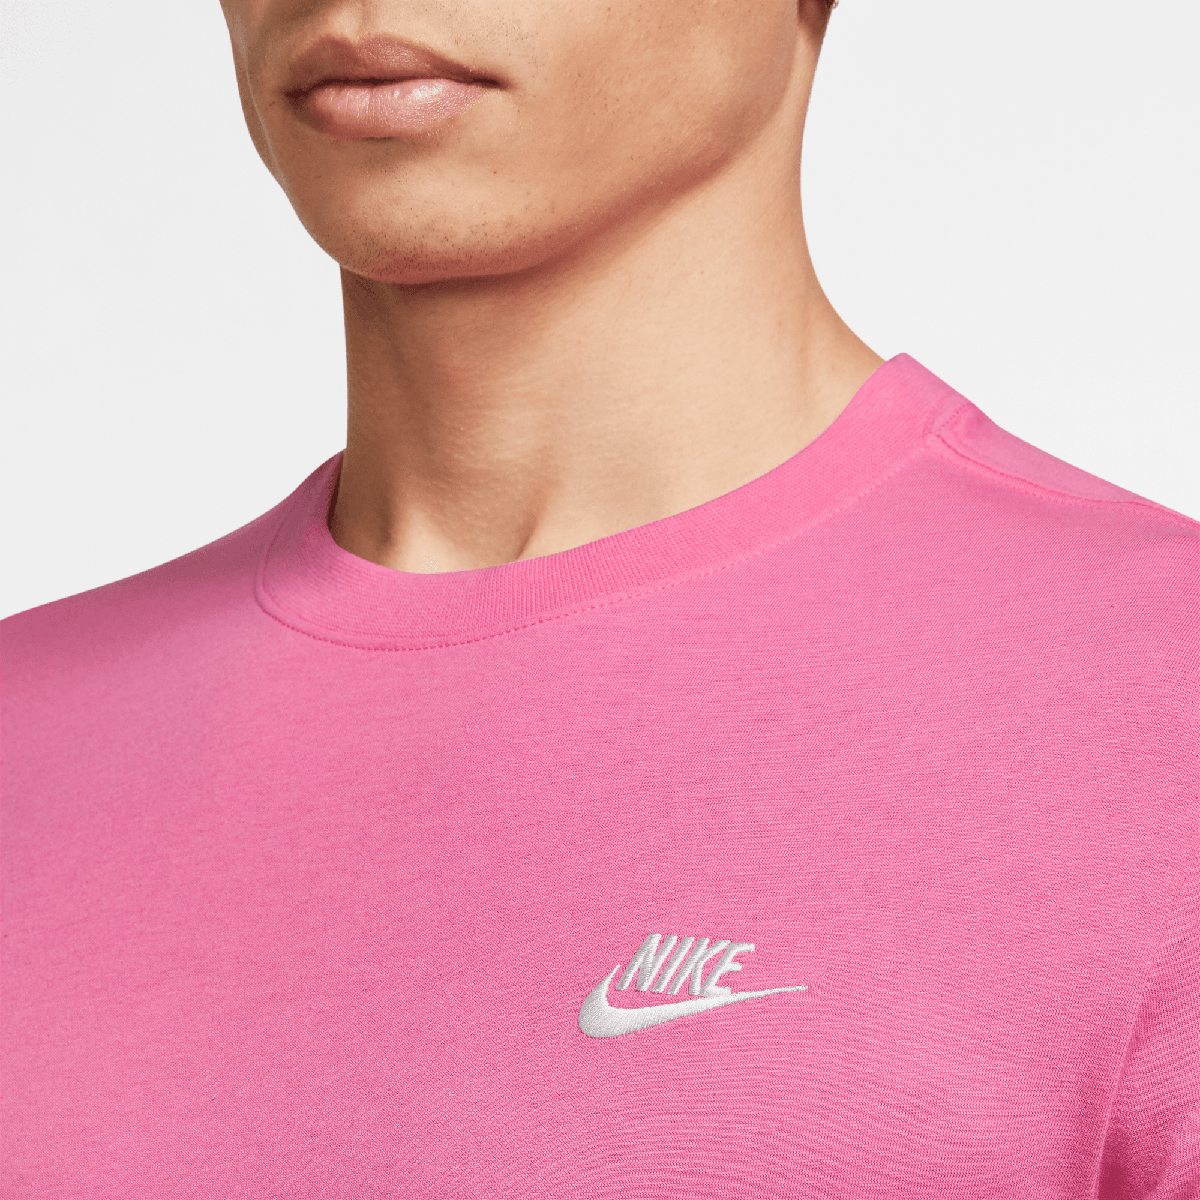 nike ones Club T Shirt Pink 1